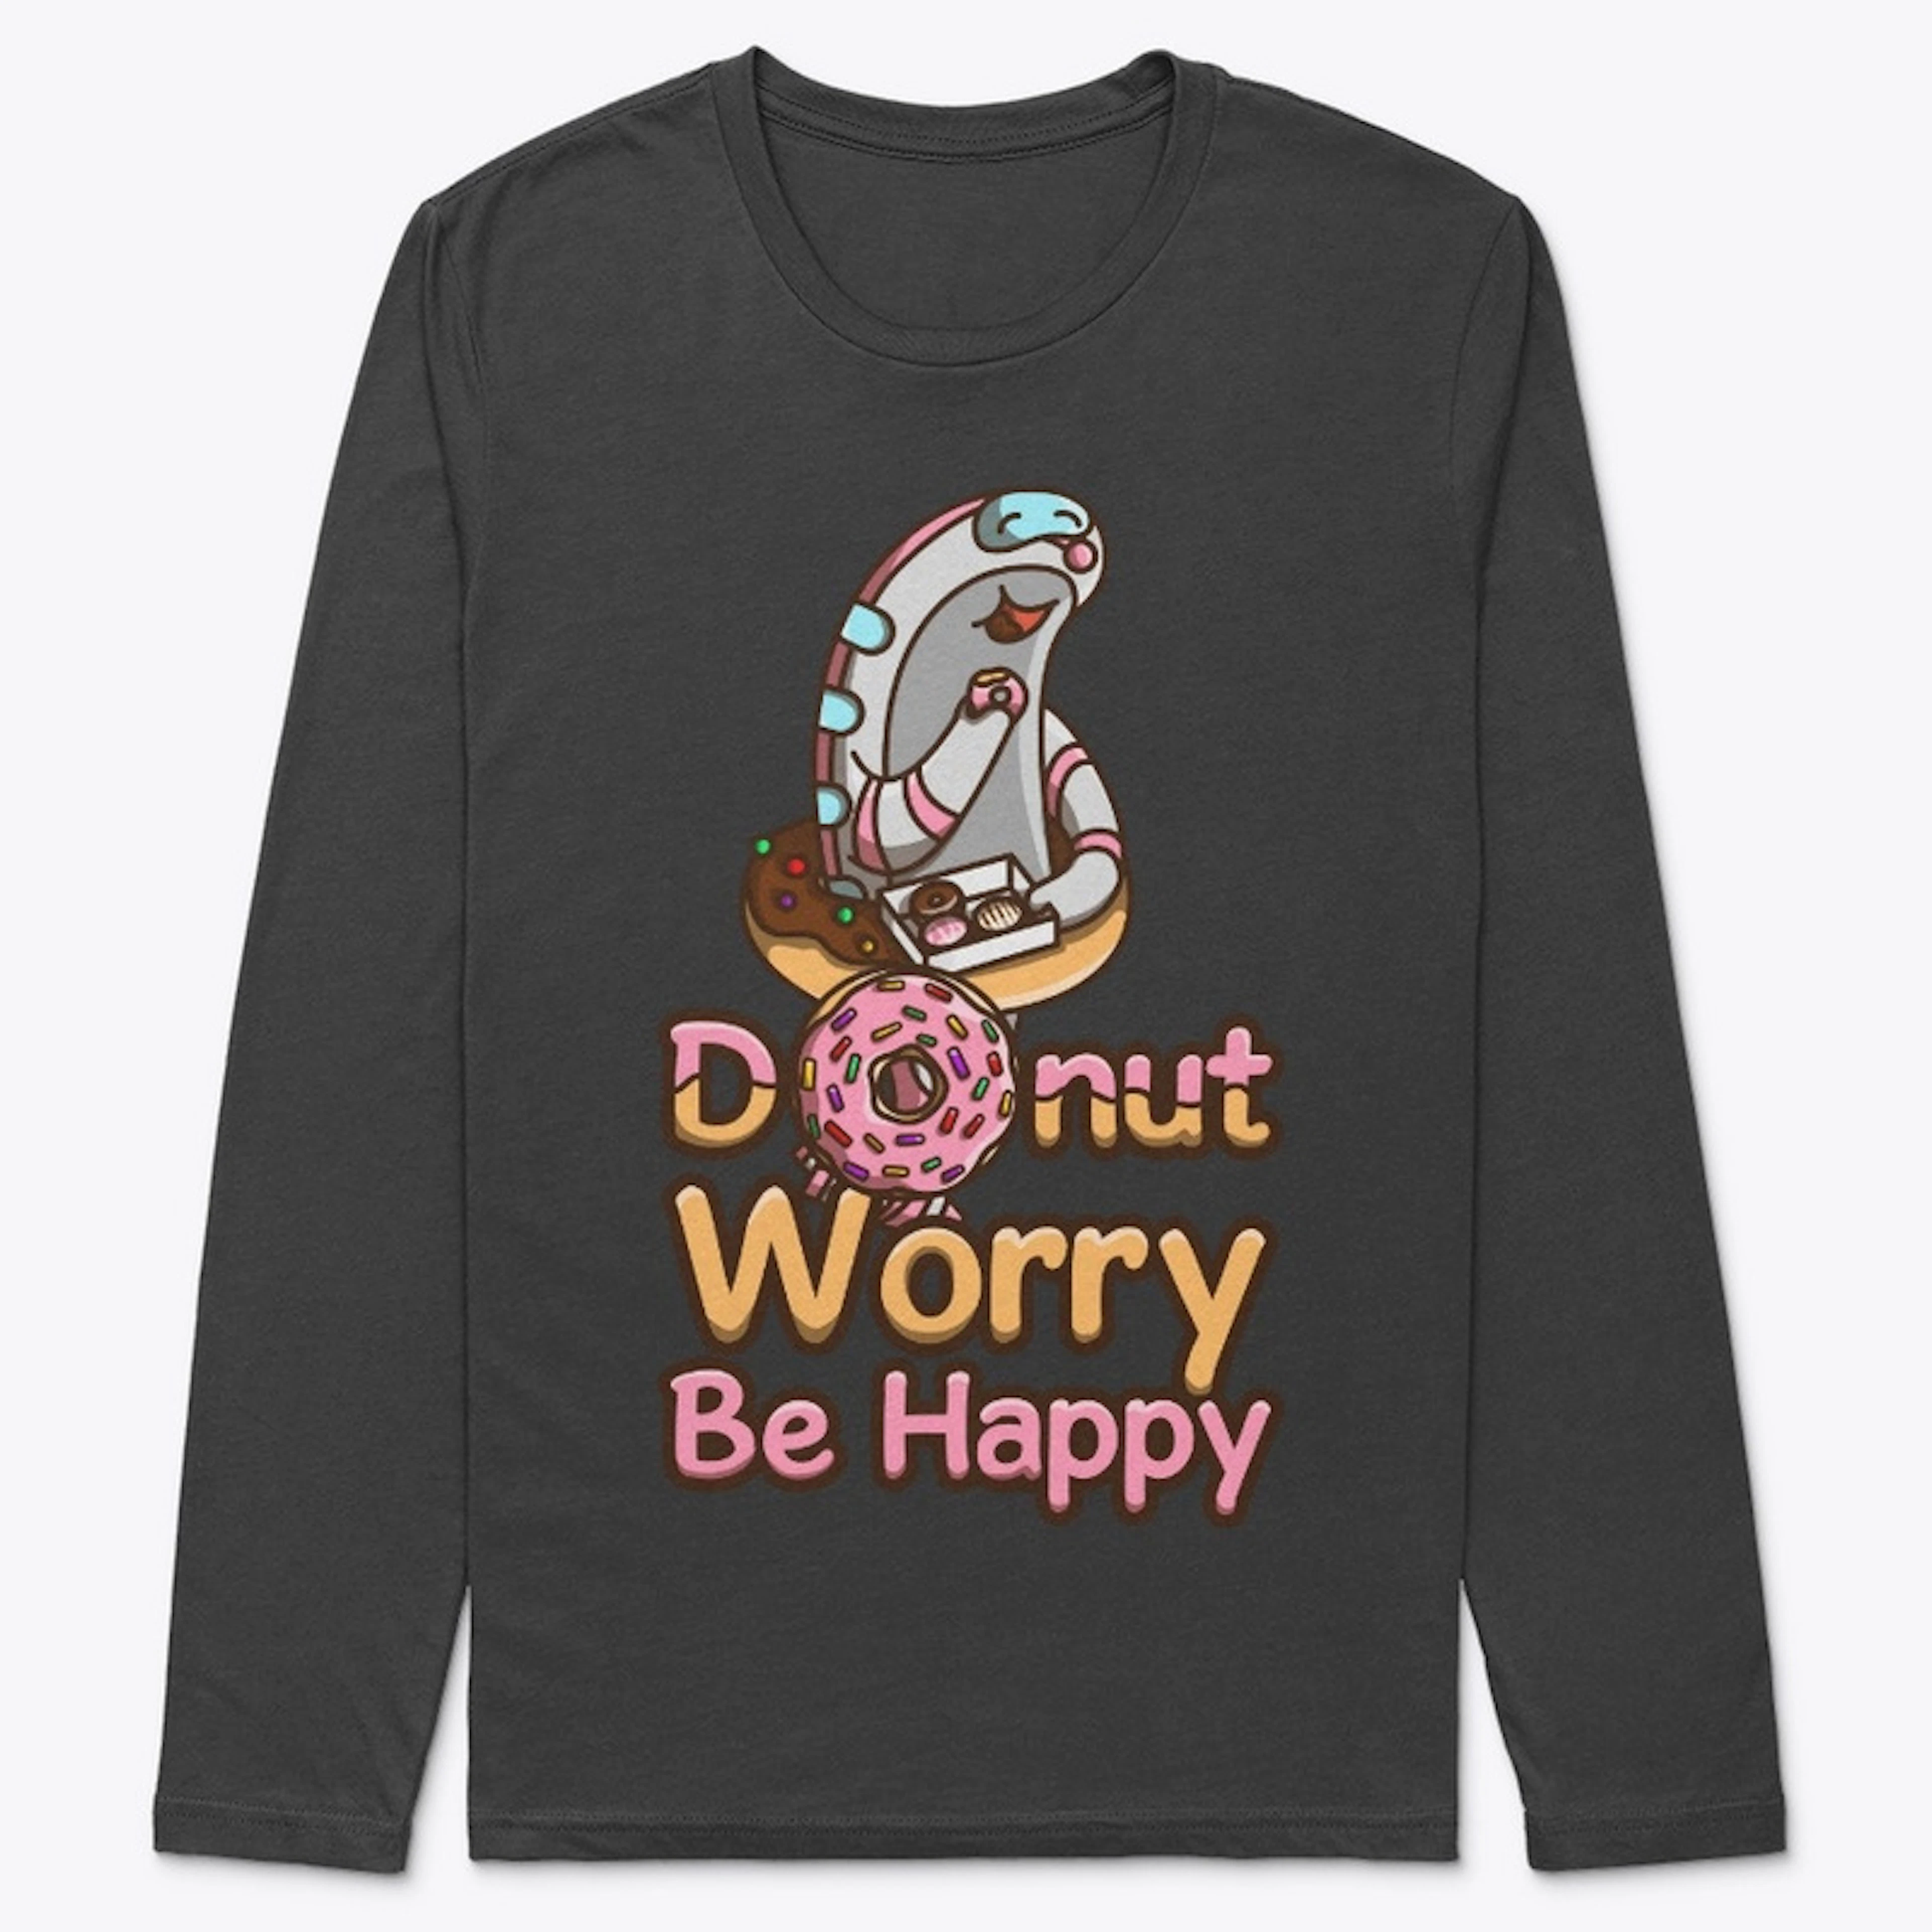 Donut Worry. Be Happy!